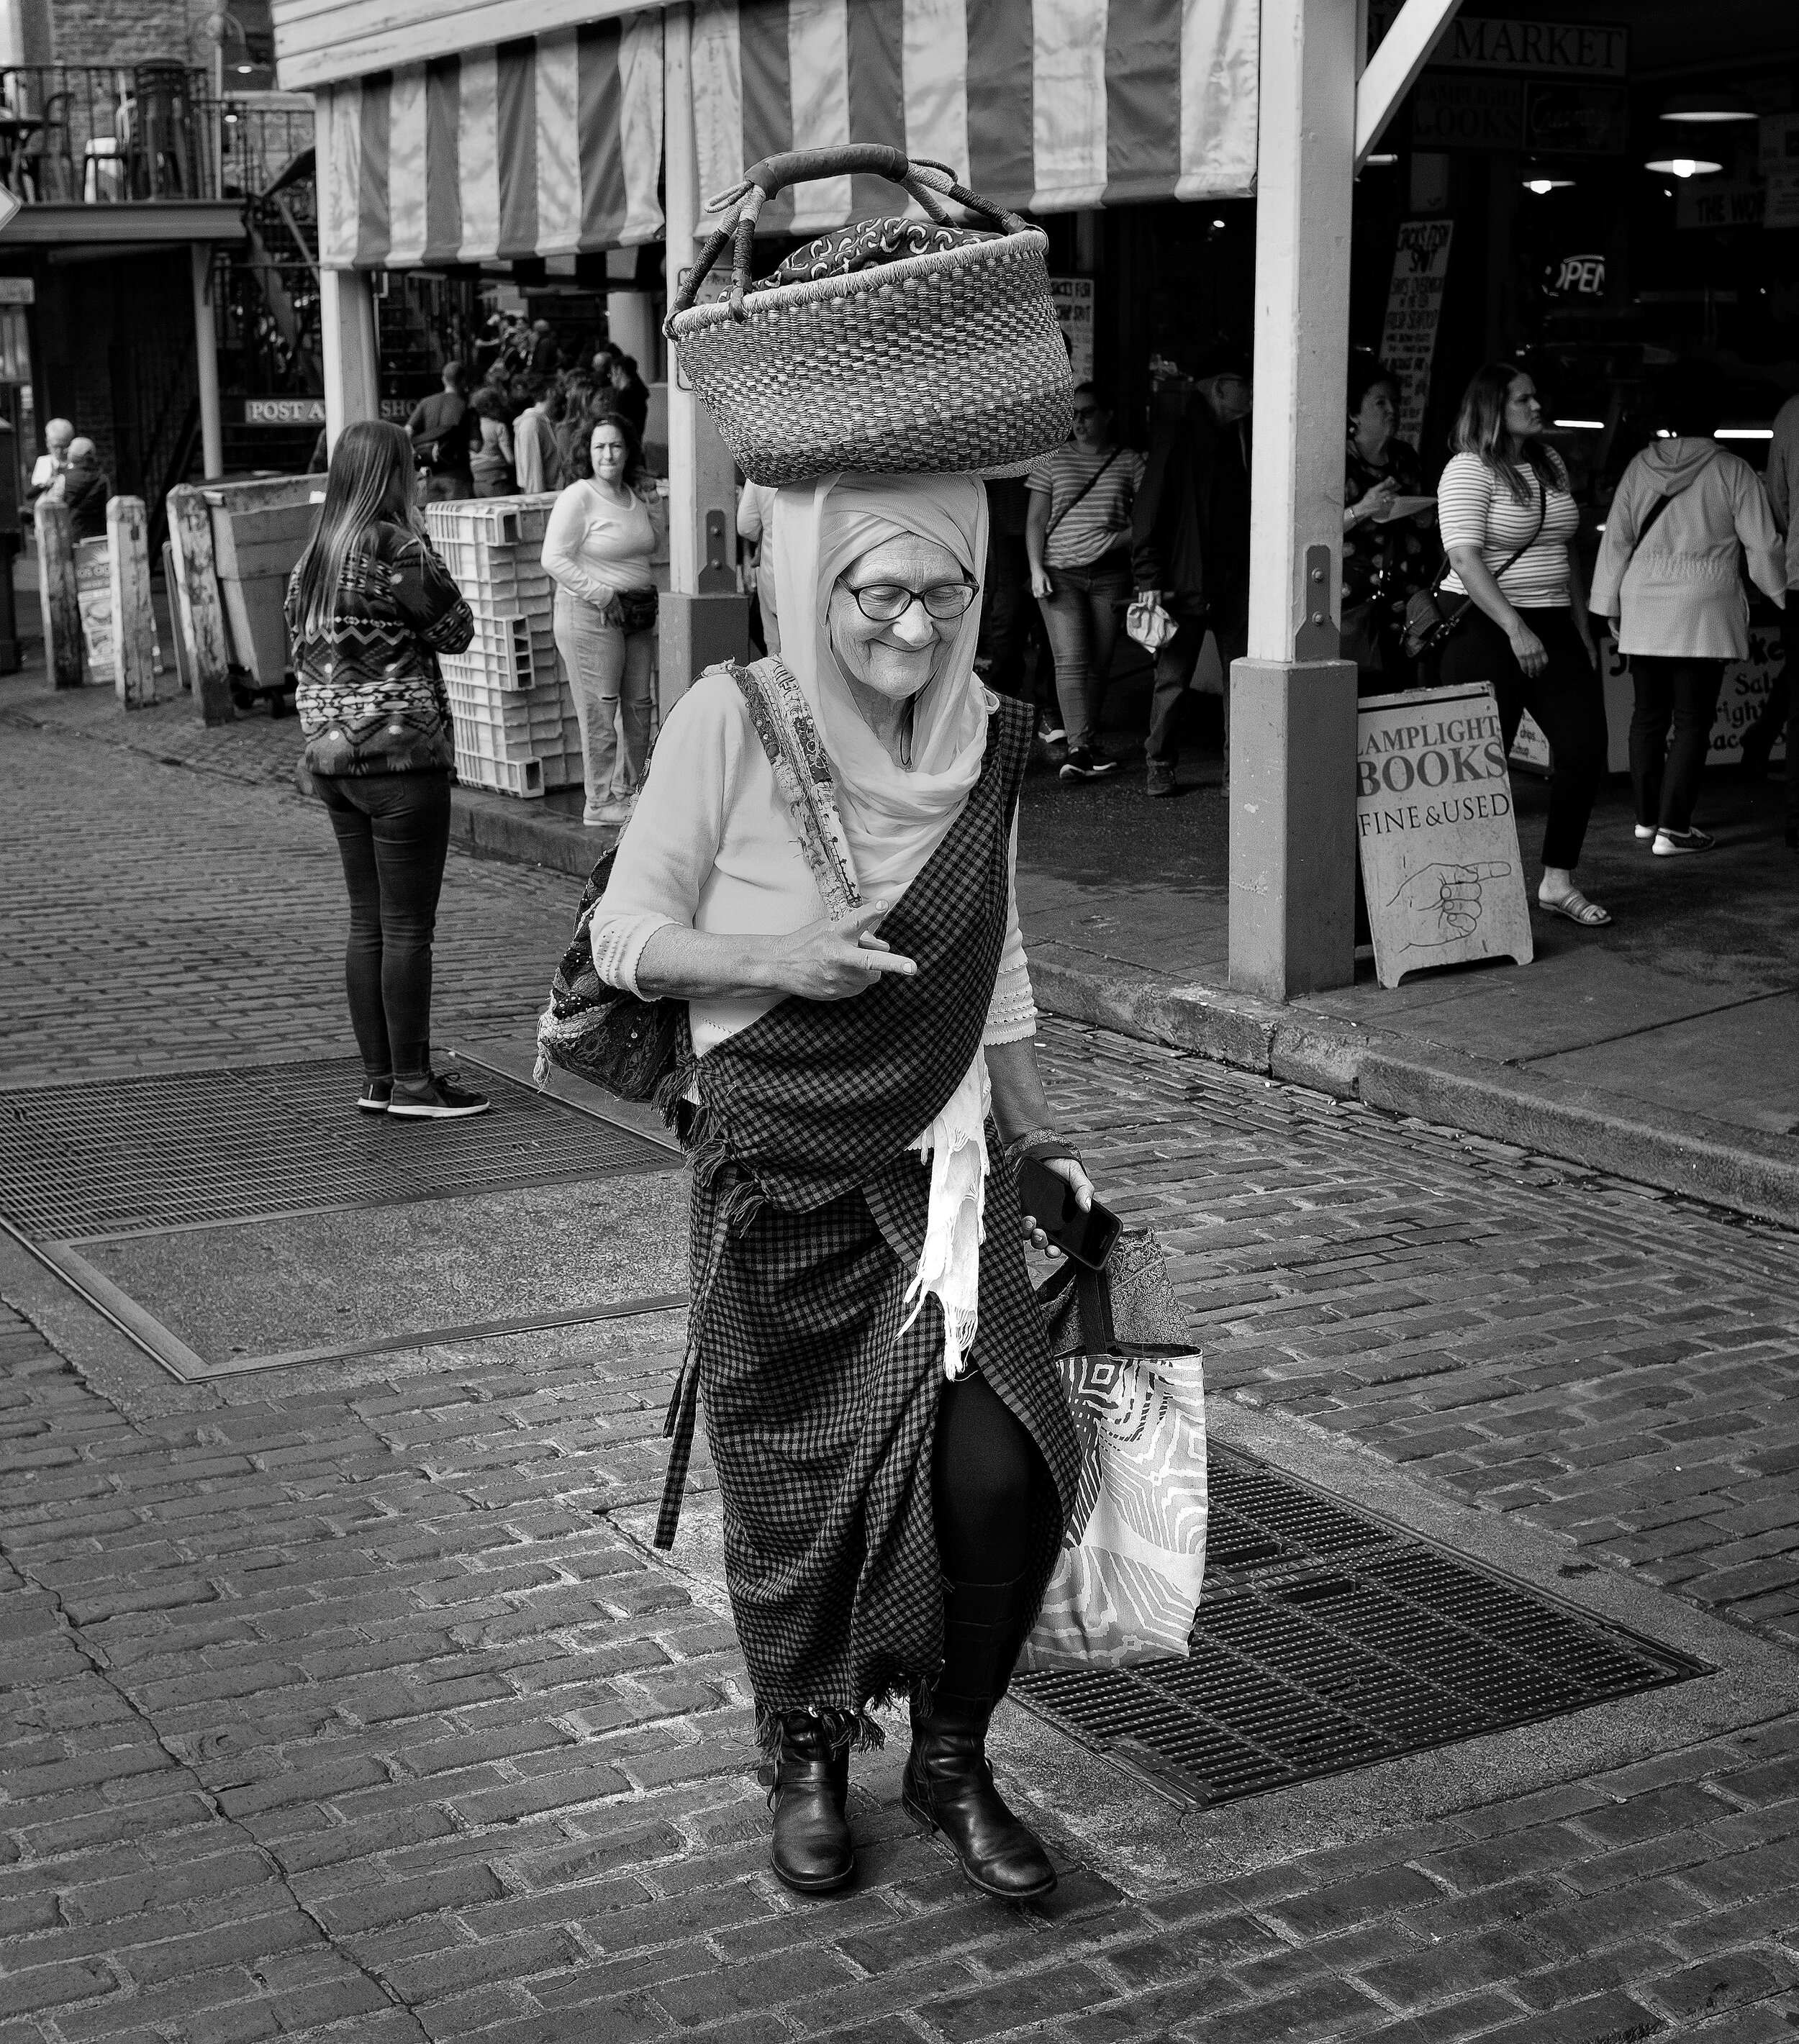 Woman with basket on head.jpg